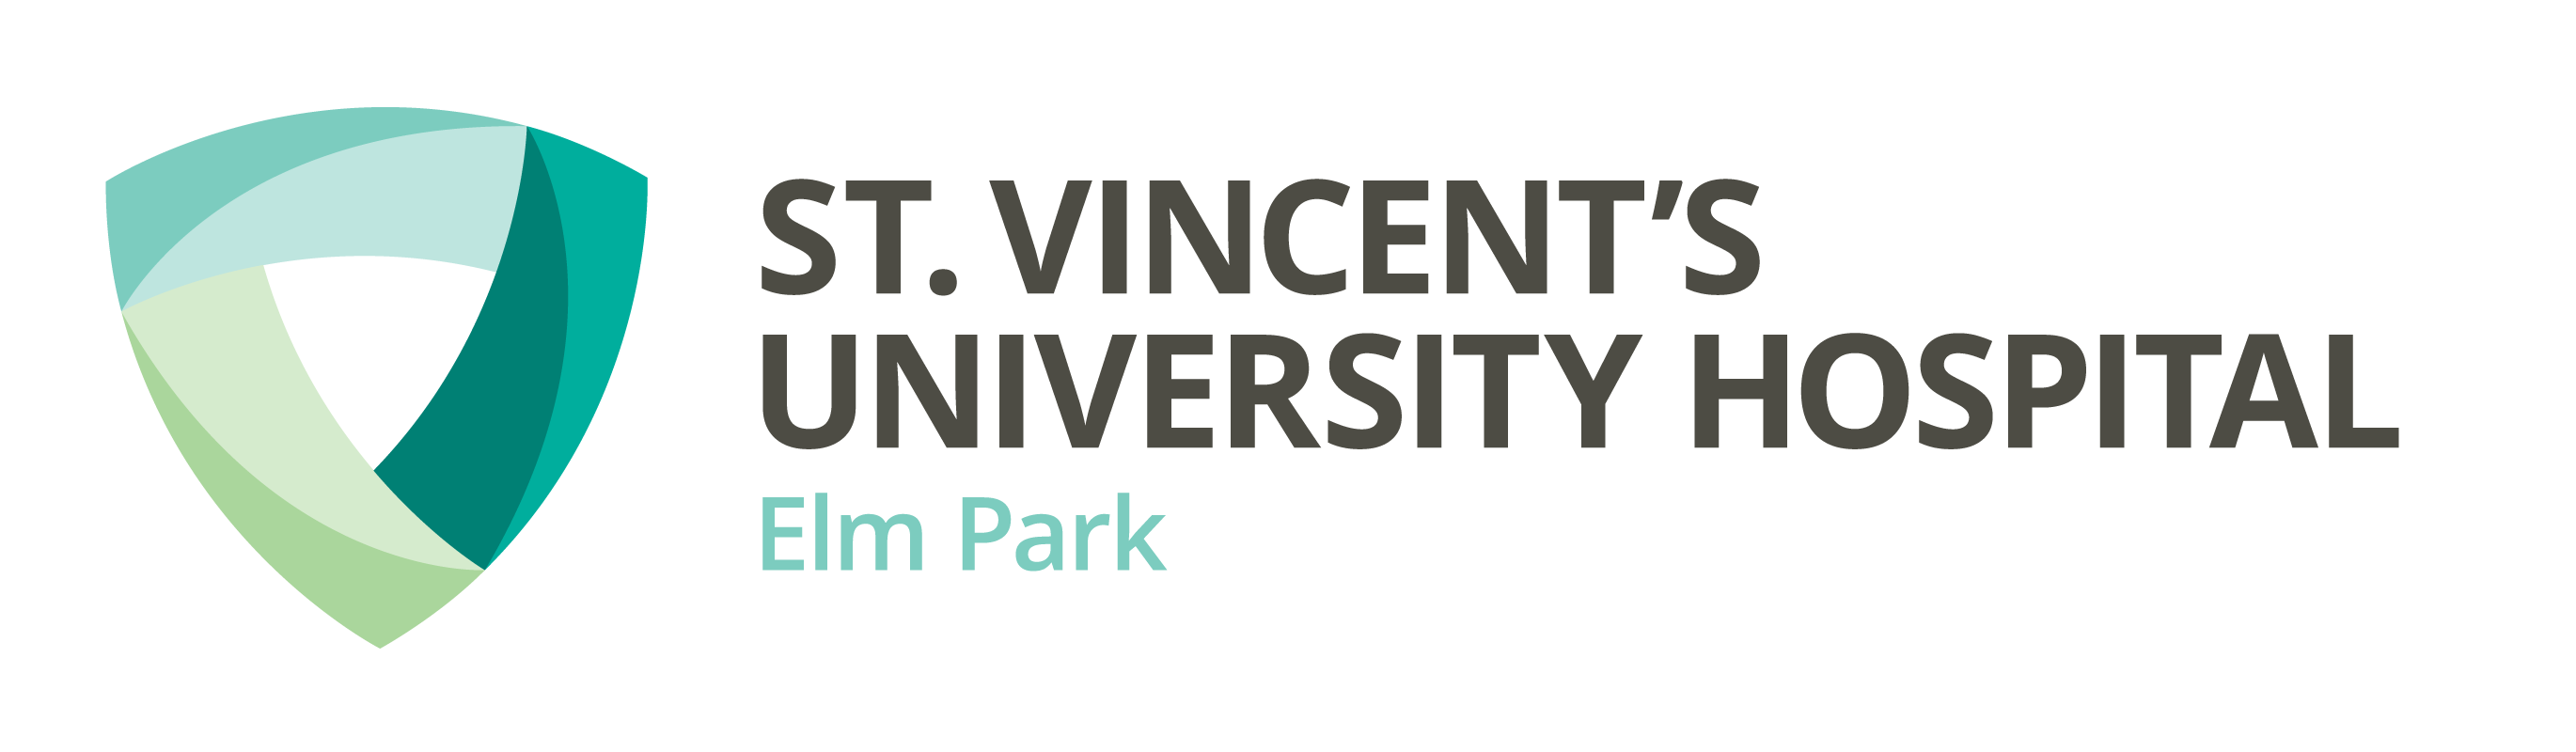 A logo for St Vincent's University Hospital